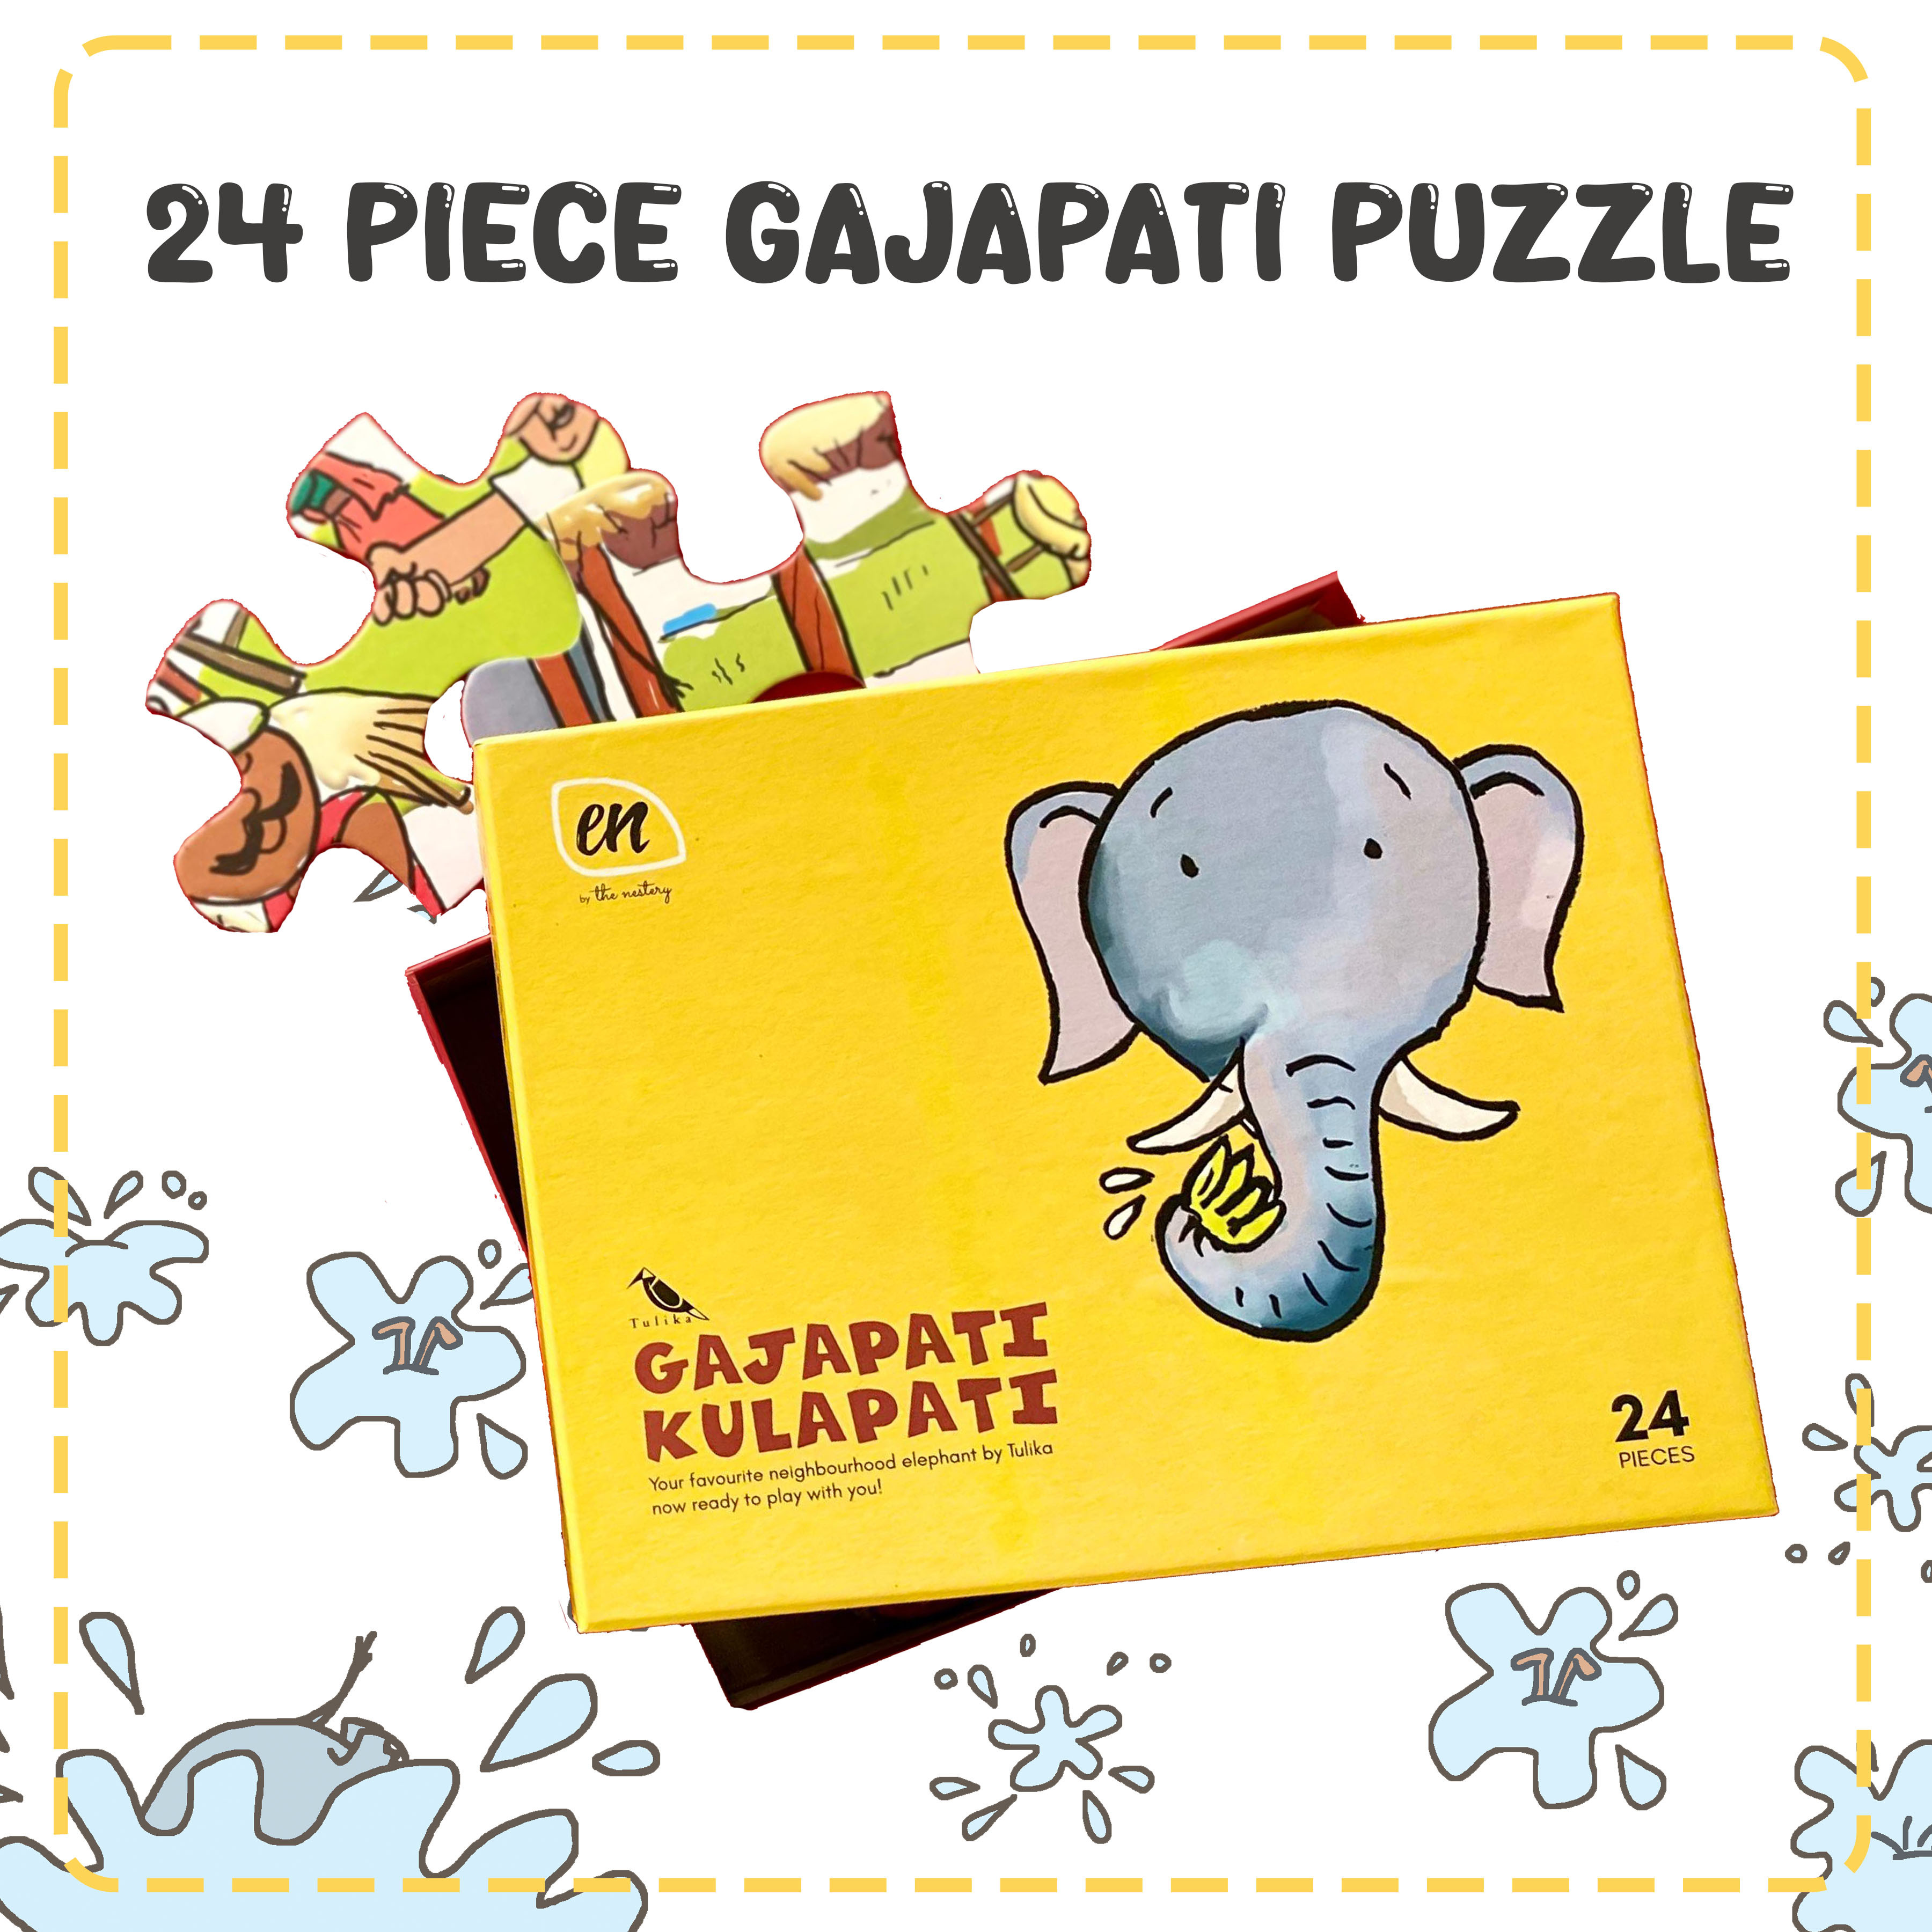 Gajapati 24 piece puzzle